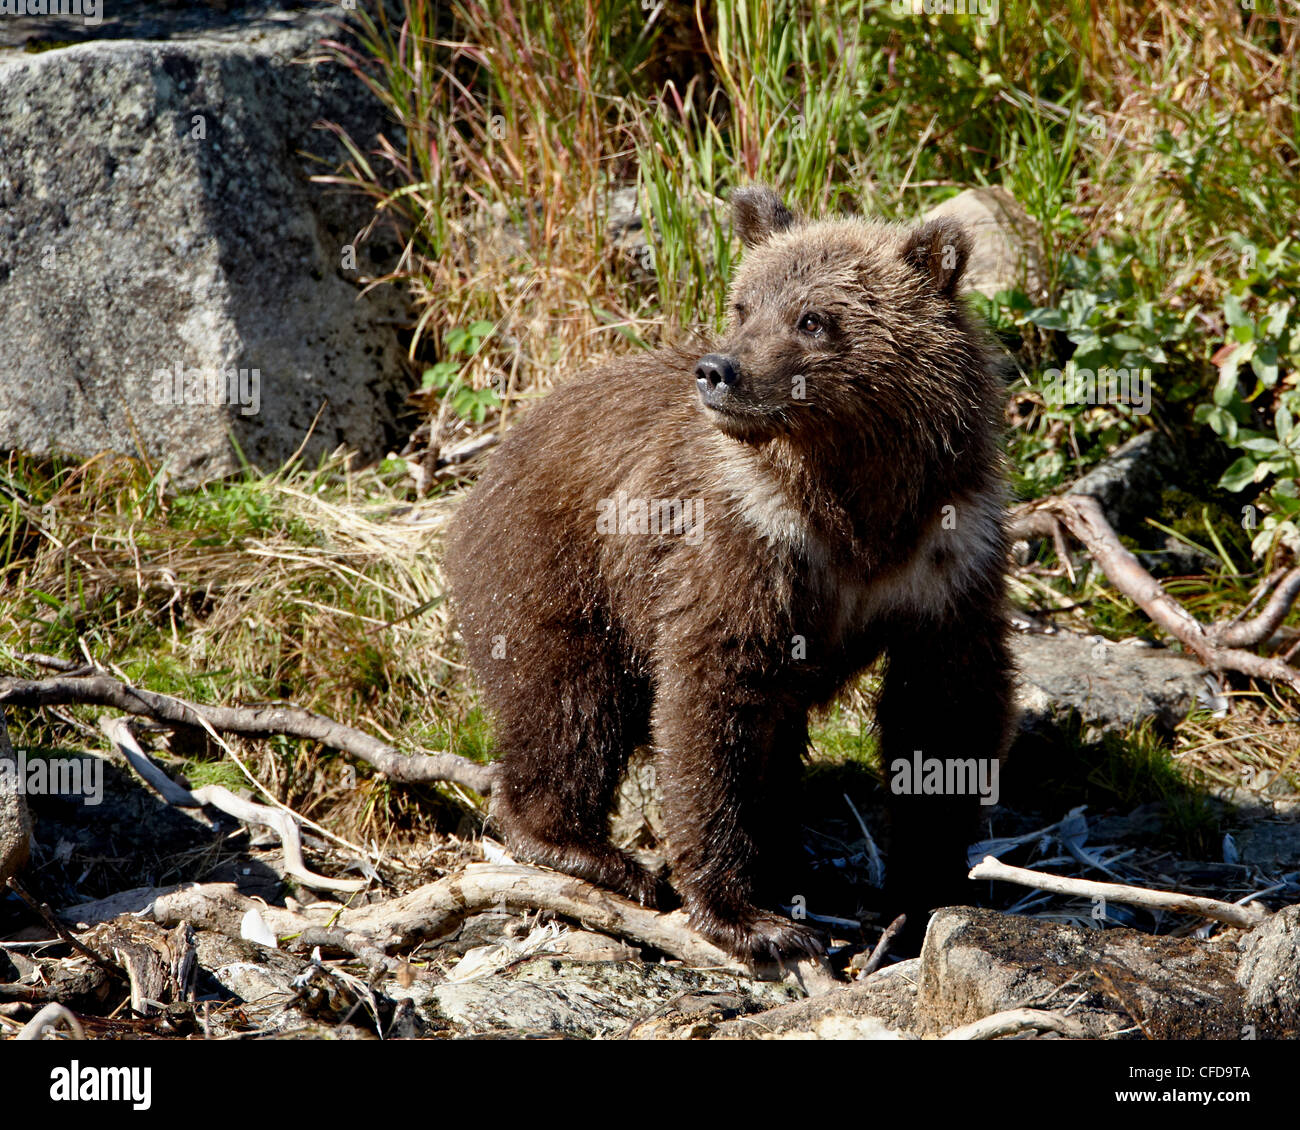 Orso grizzly (Ursus arctos horribilis) (costiere orso bruno) cub, Parco Nazionale e Riserva di Katmai, Alaska, STATI UNITI D'AMERICA Foto Stock